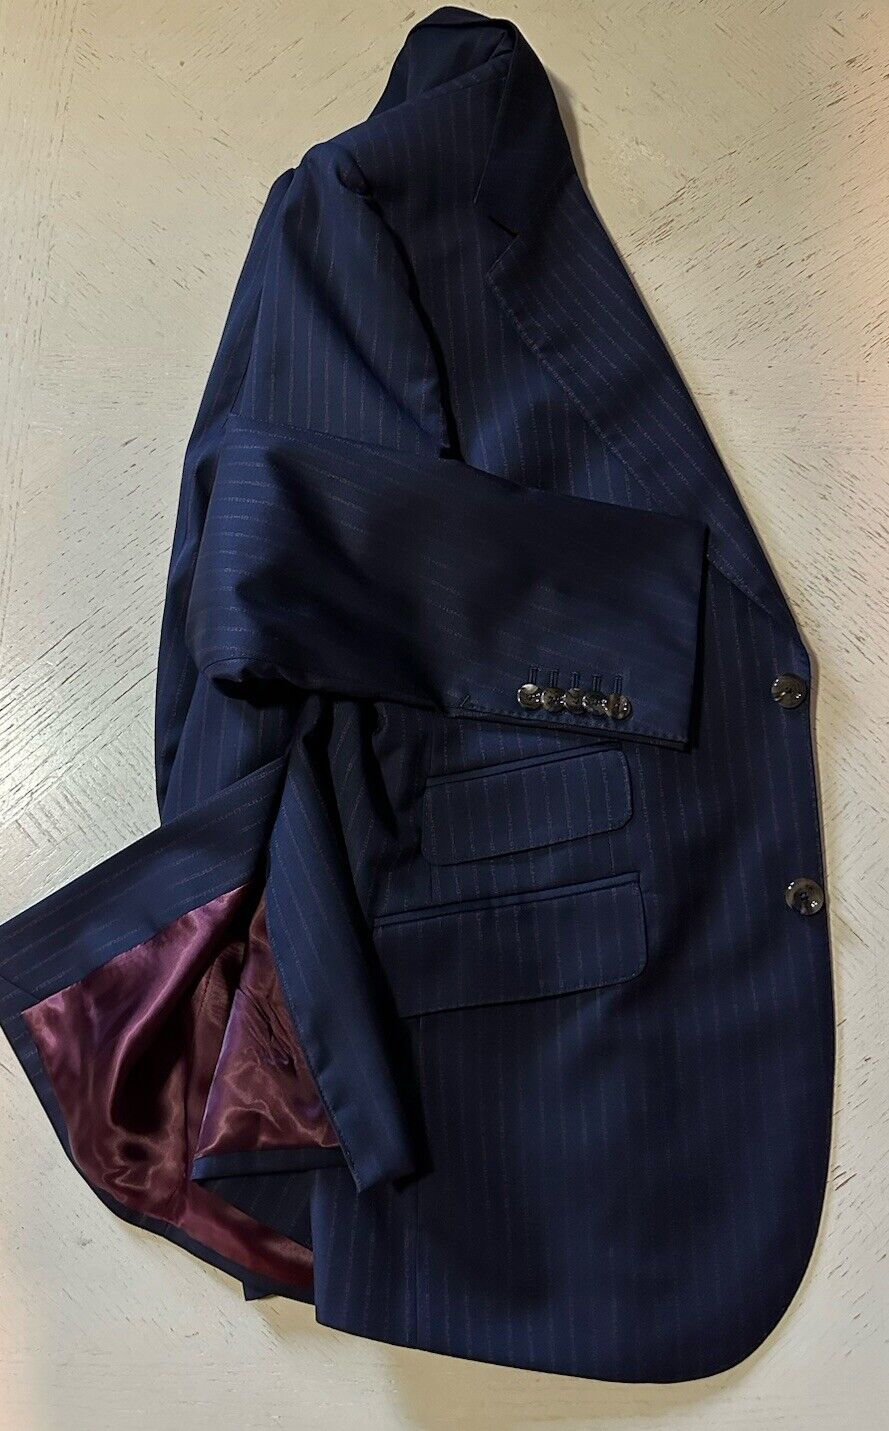 NWT $3800 Gucci Men Gucci Monogram Red Striped Suit Navy 38R US/48R Eu